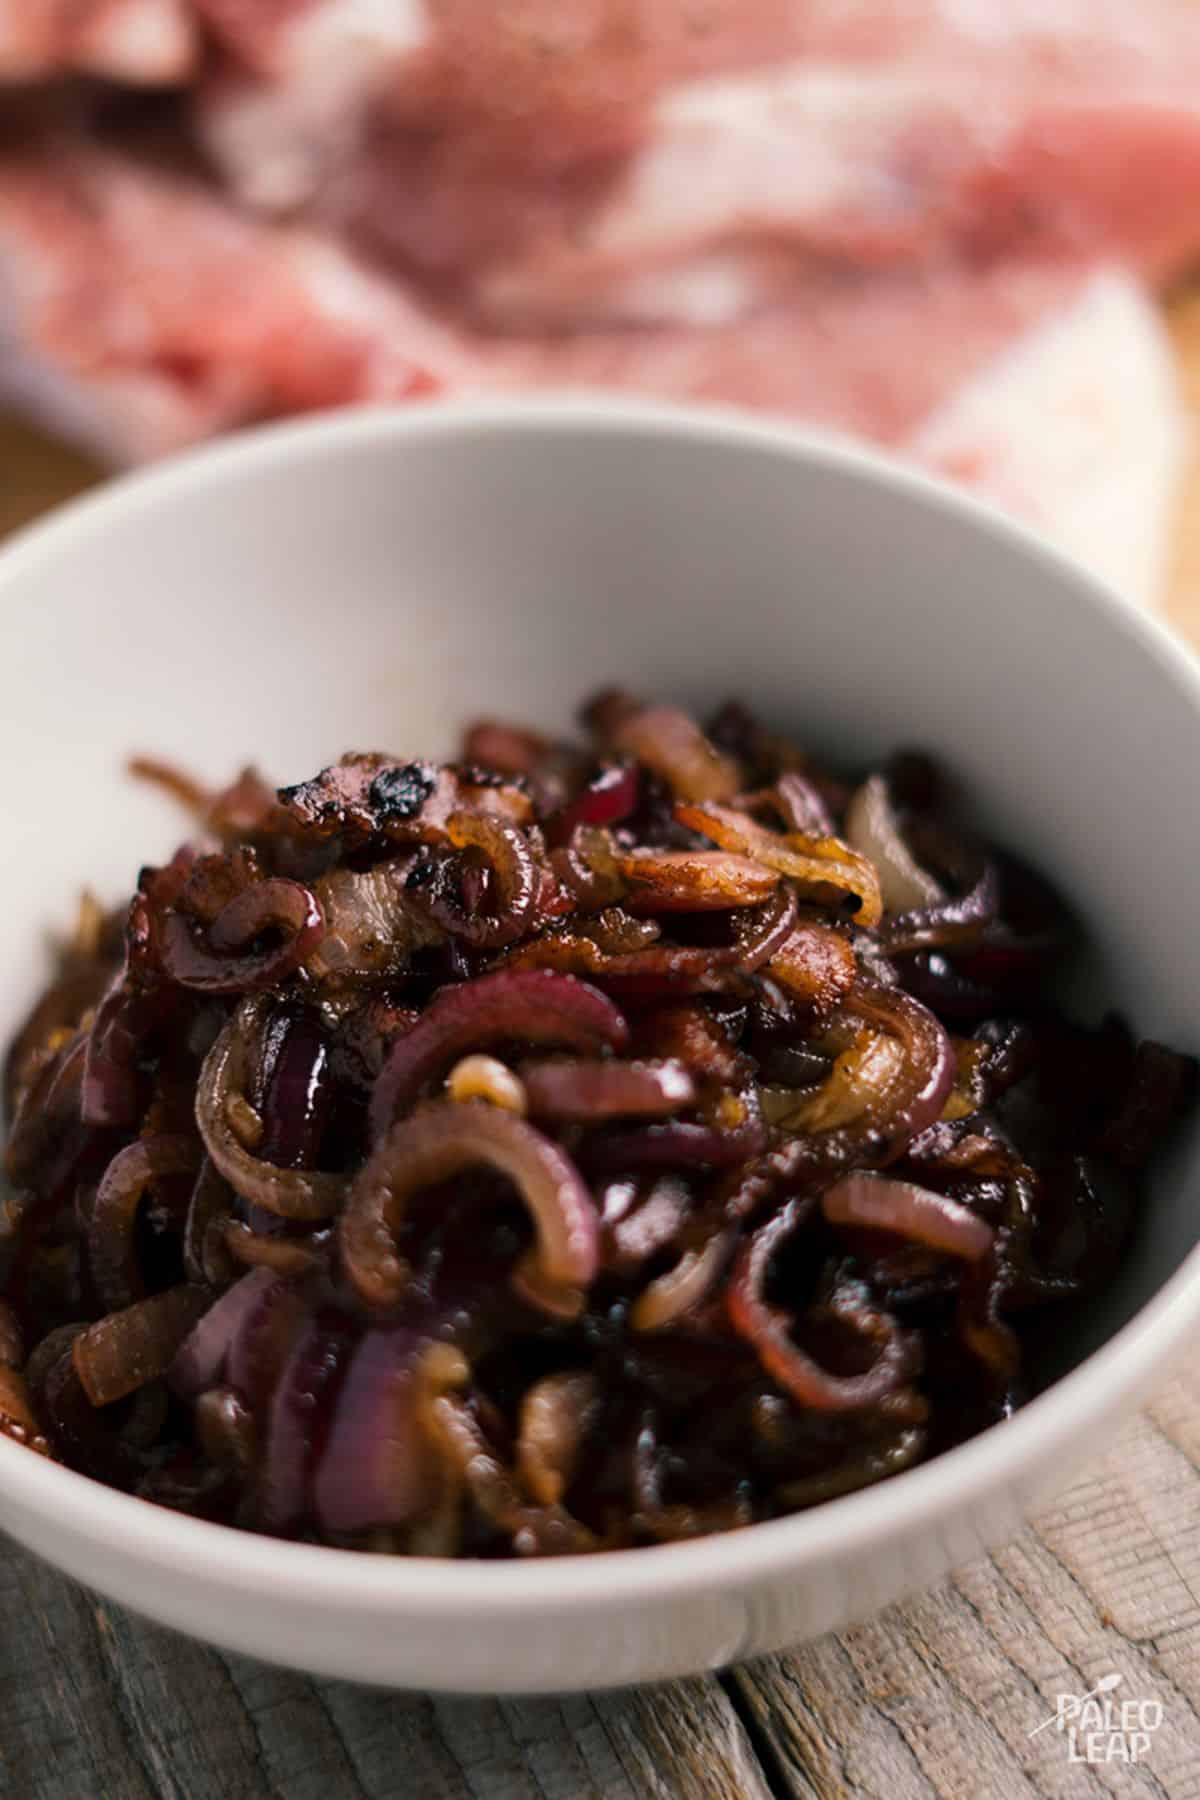 Caramelized Onion and Bacon Pork Chops Recipe Preparation